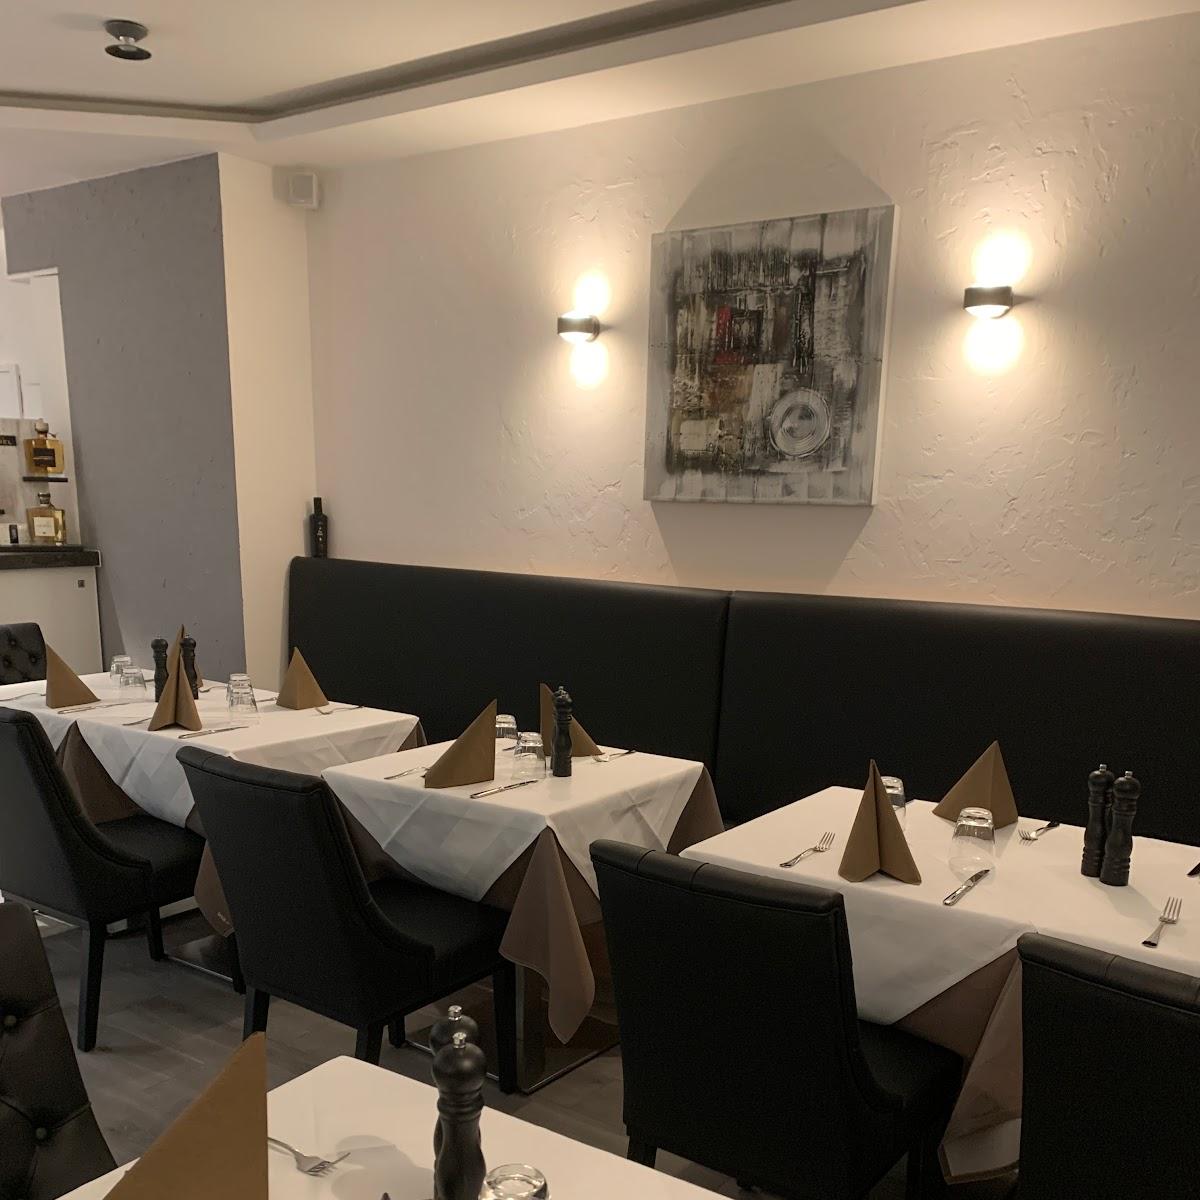 Restaurant "Pepe Bianco" in Bad Soden am Taunus